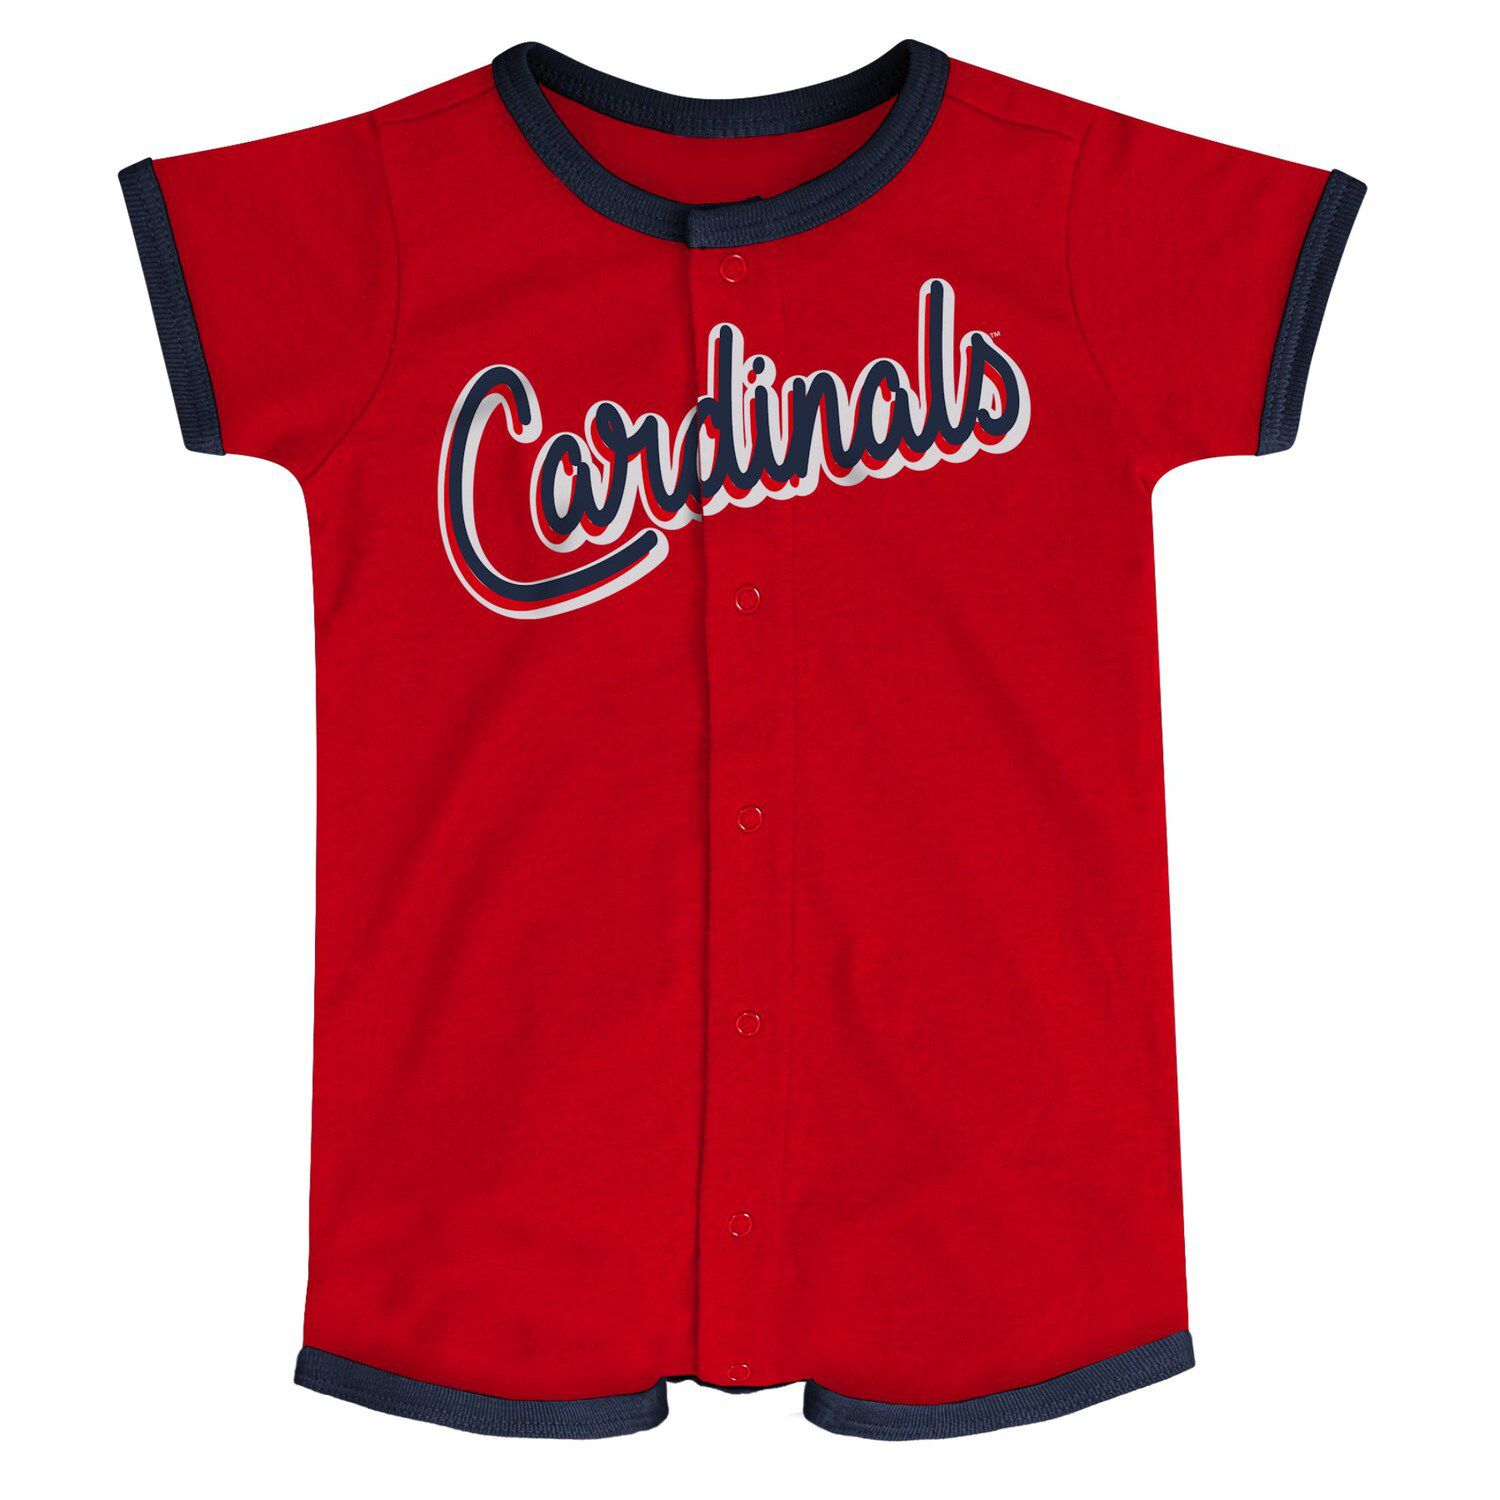 Baby MLB St. Louis Cardinals Romper